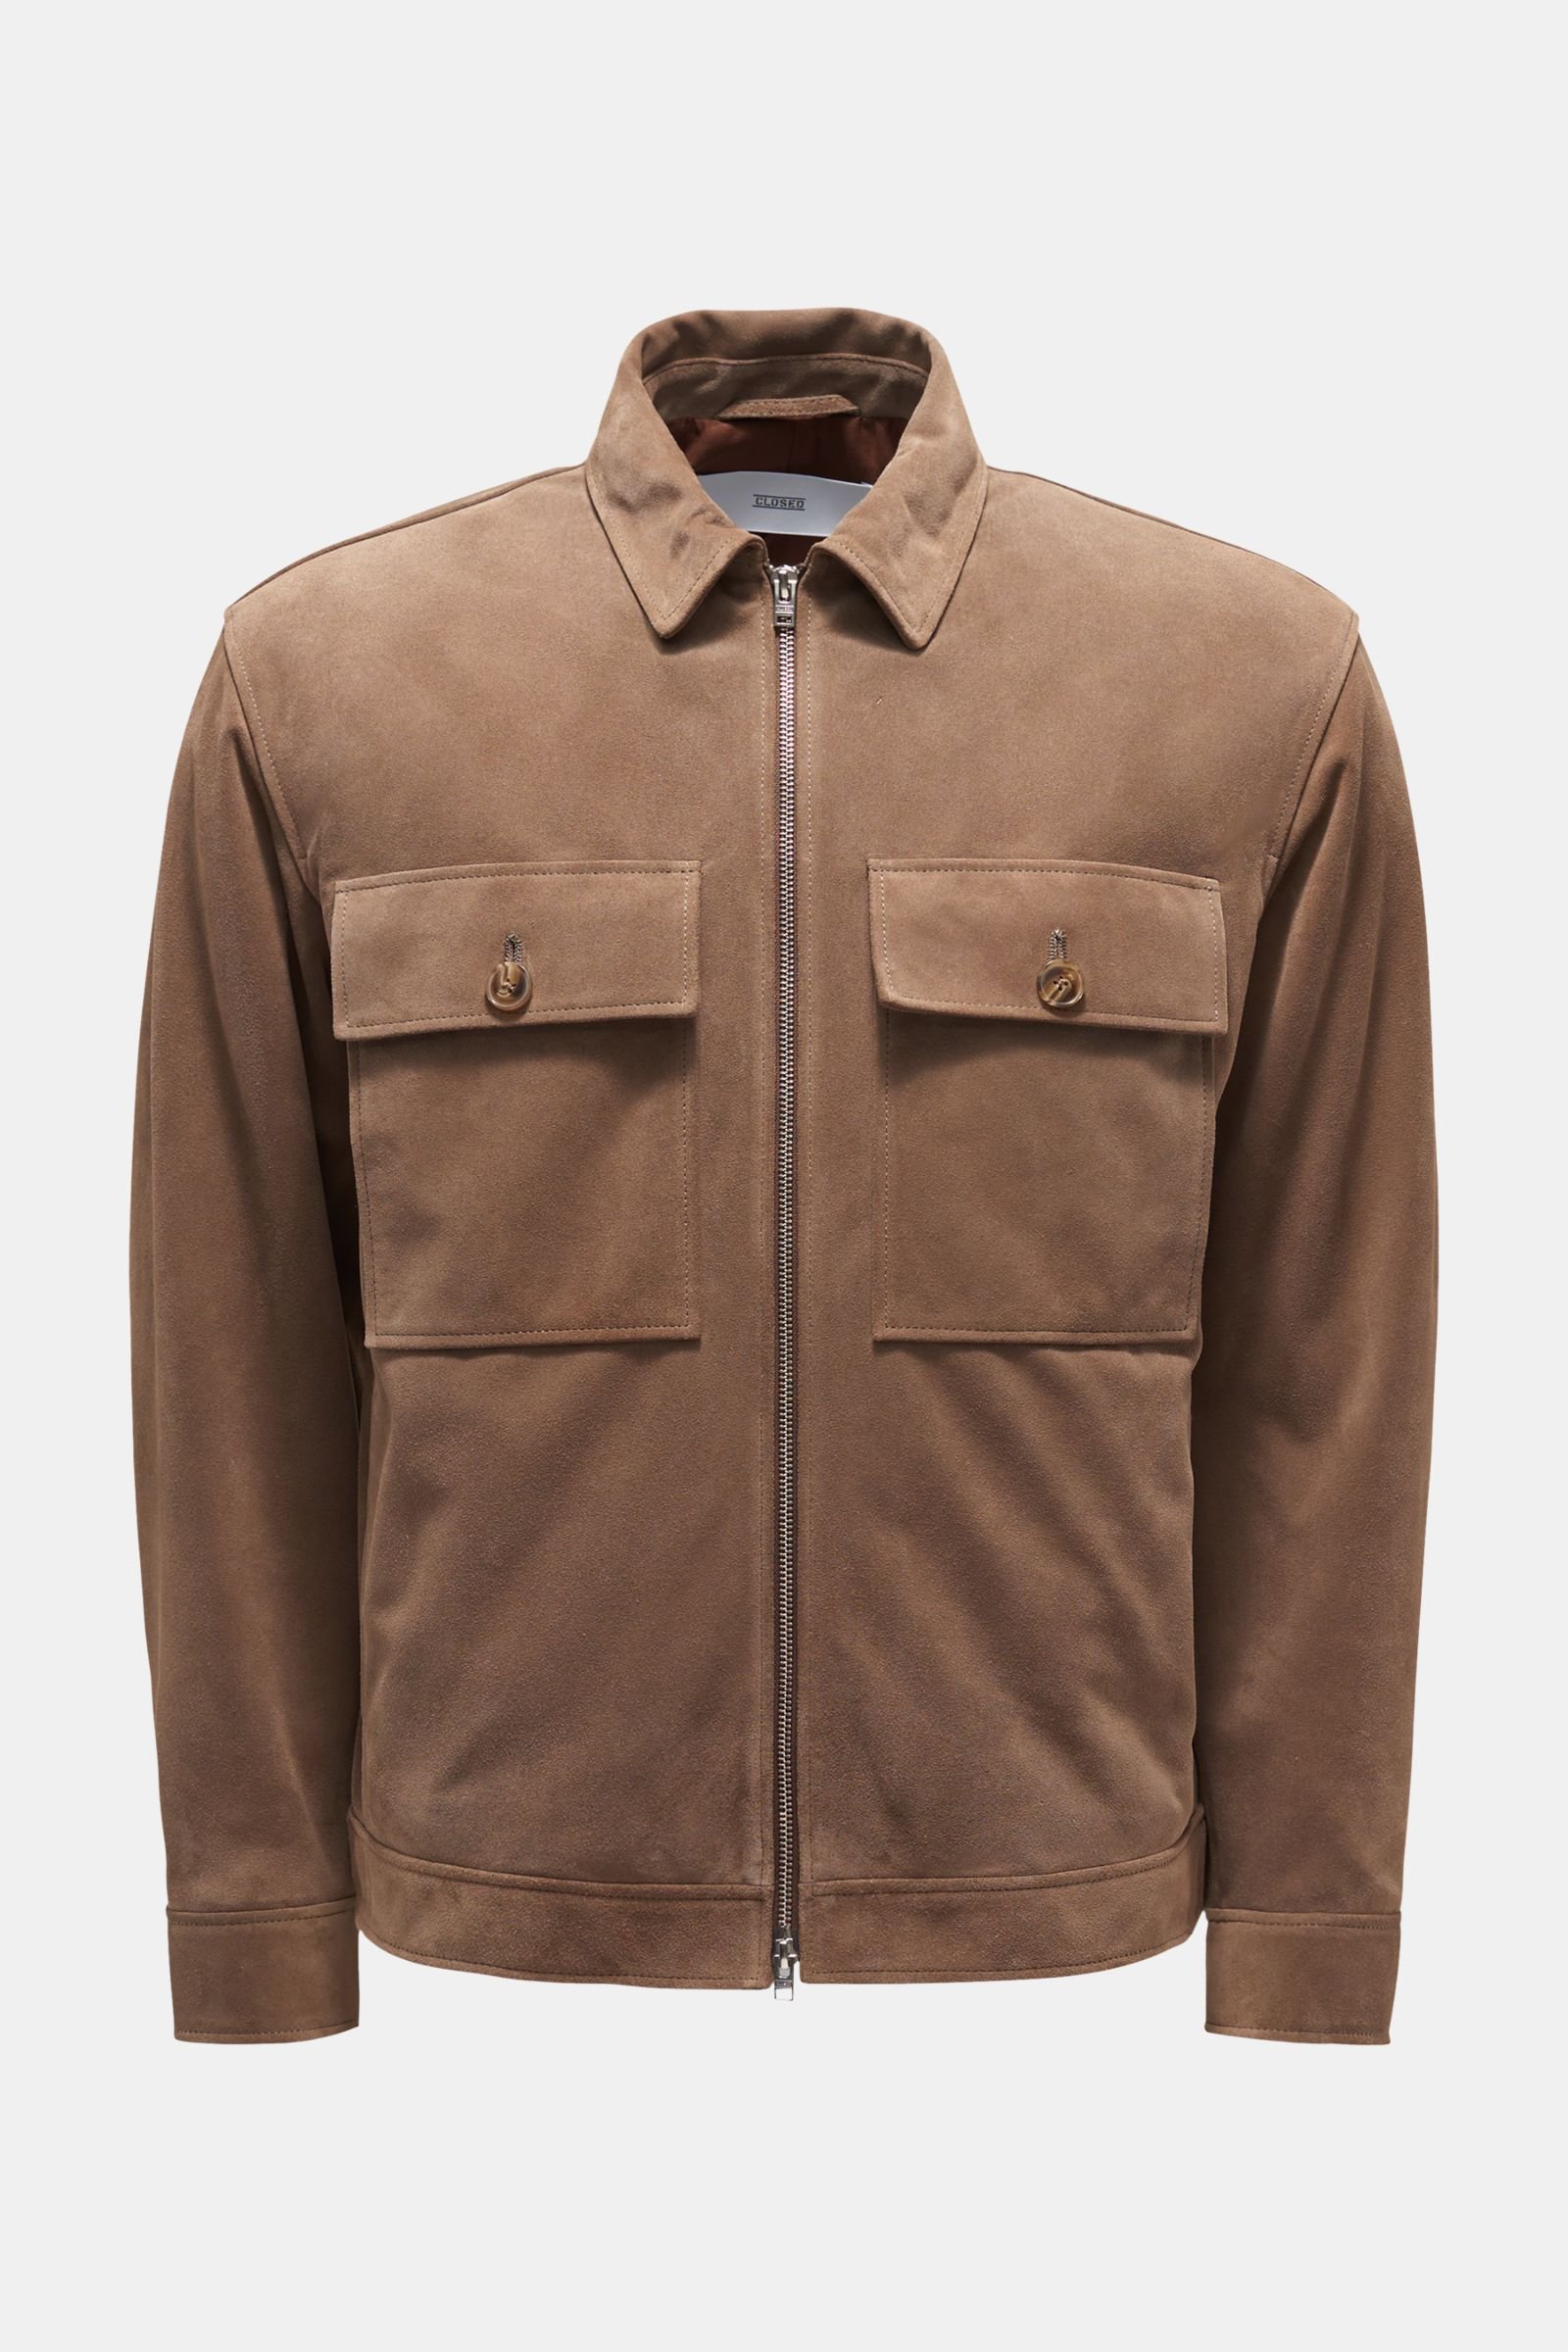 Leather jacket grey-brown